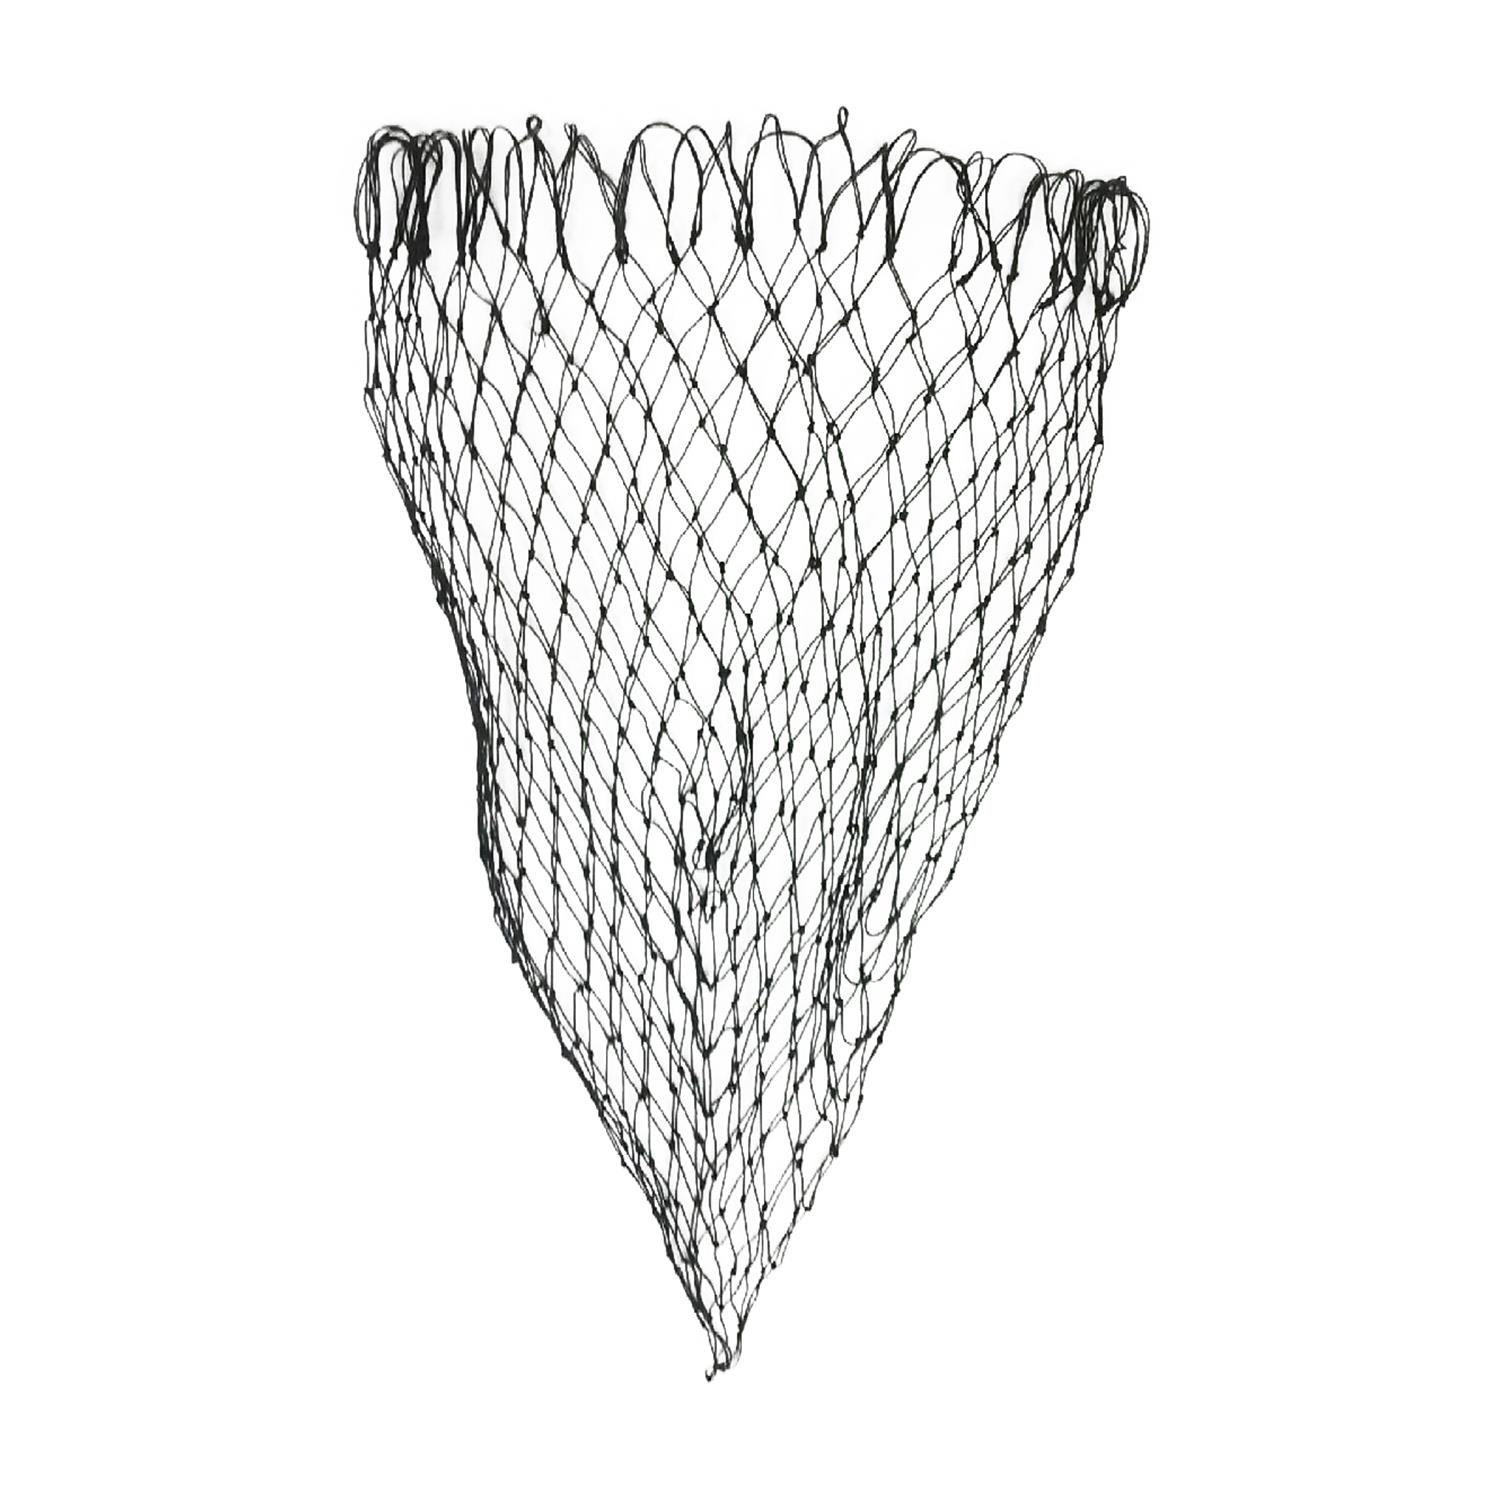 Ranger Nets Floating Wading & Kayak Net - Hoop Size: 18 x 18 - Handle  Length: 8 - Net Depth: 24